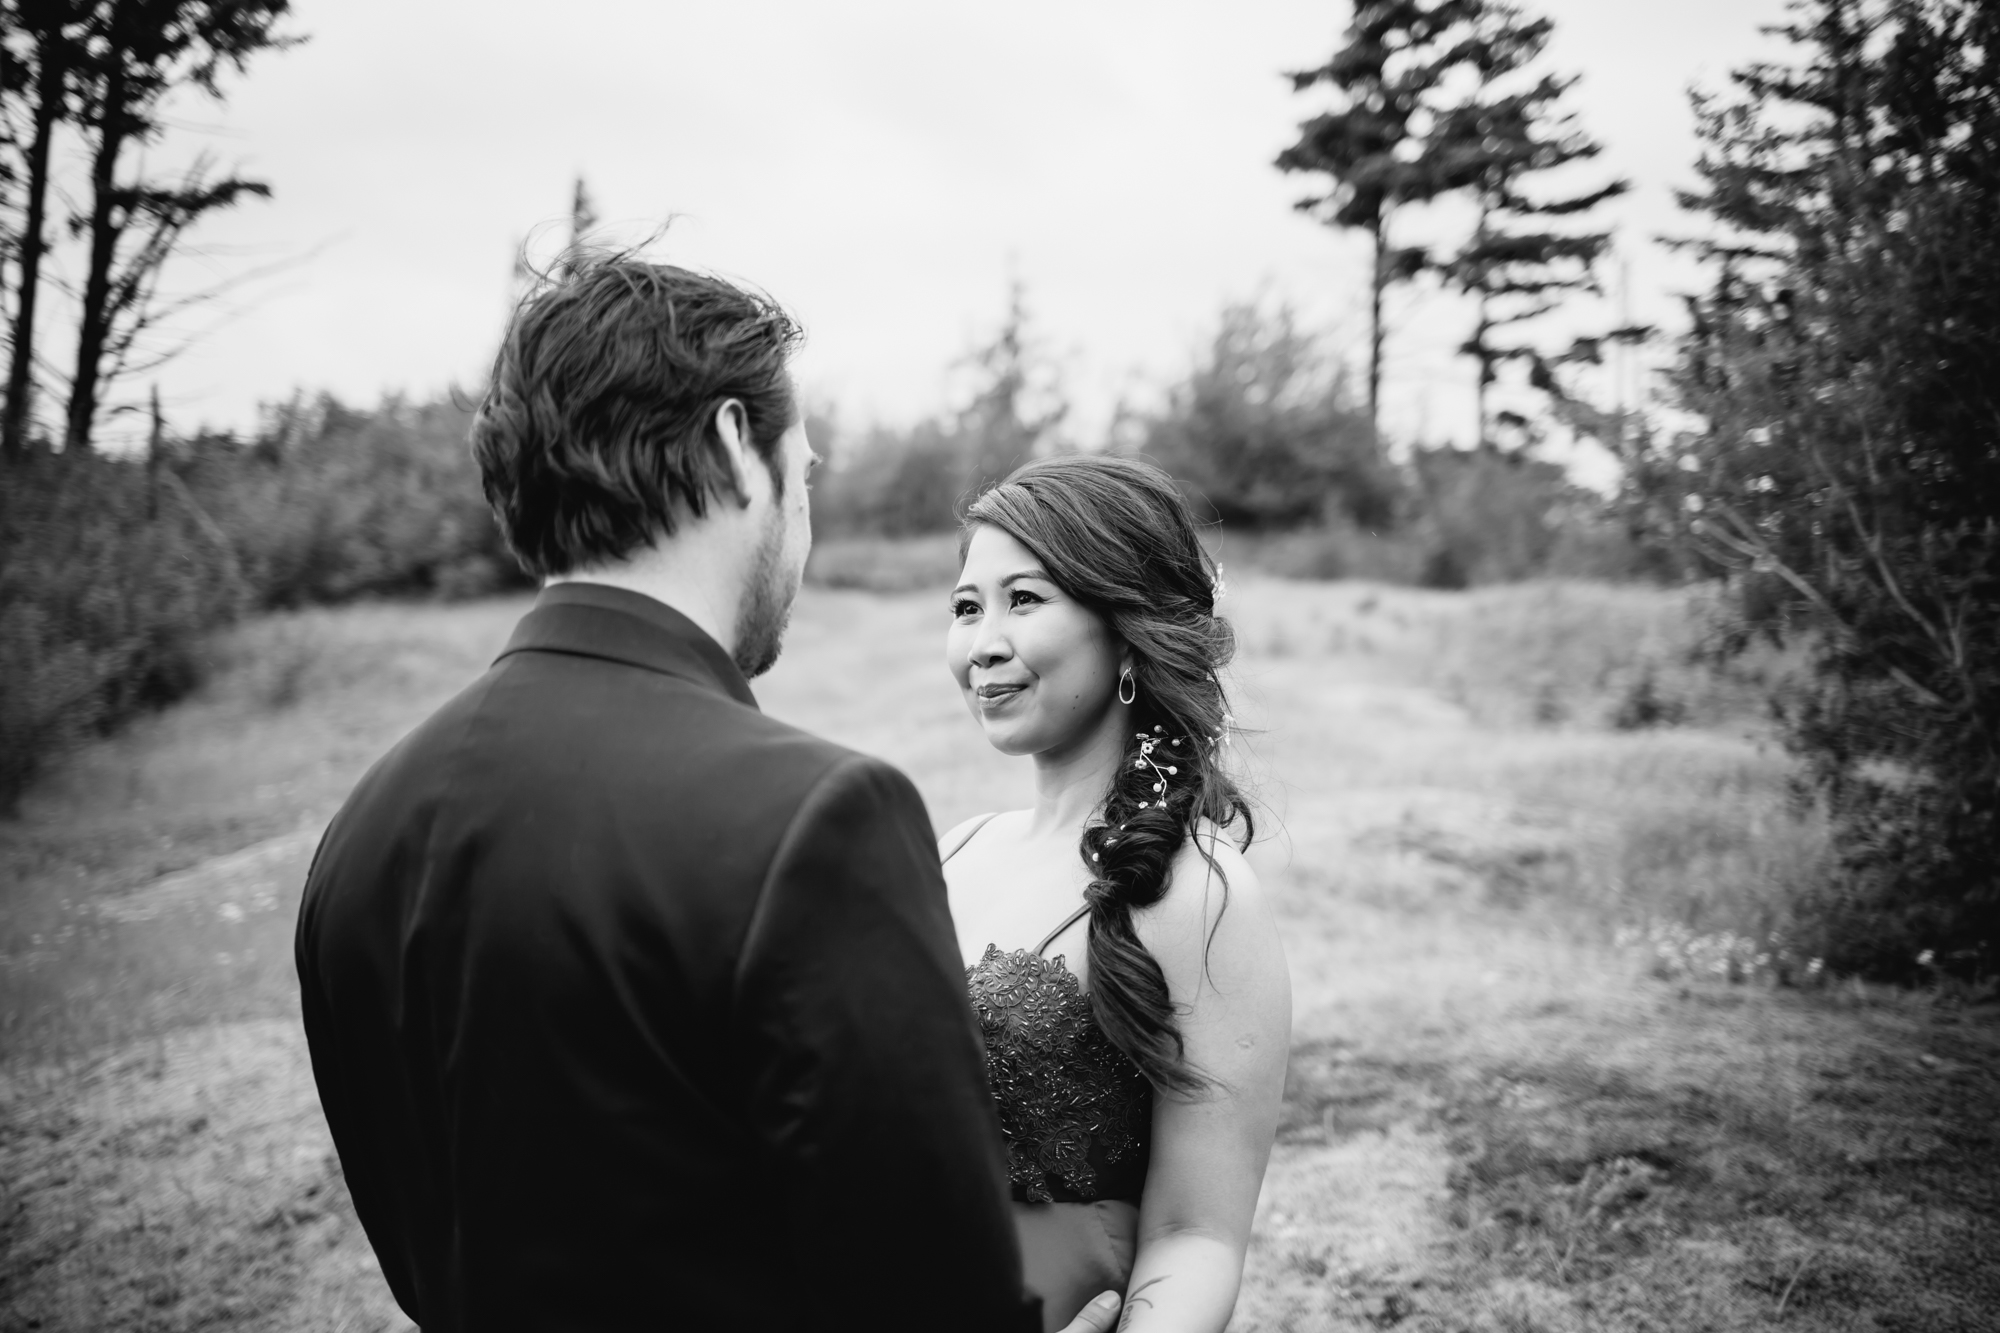 Black and white photo of newlyweds